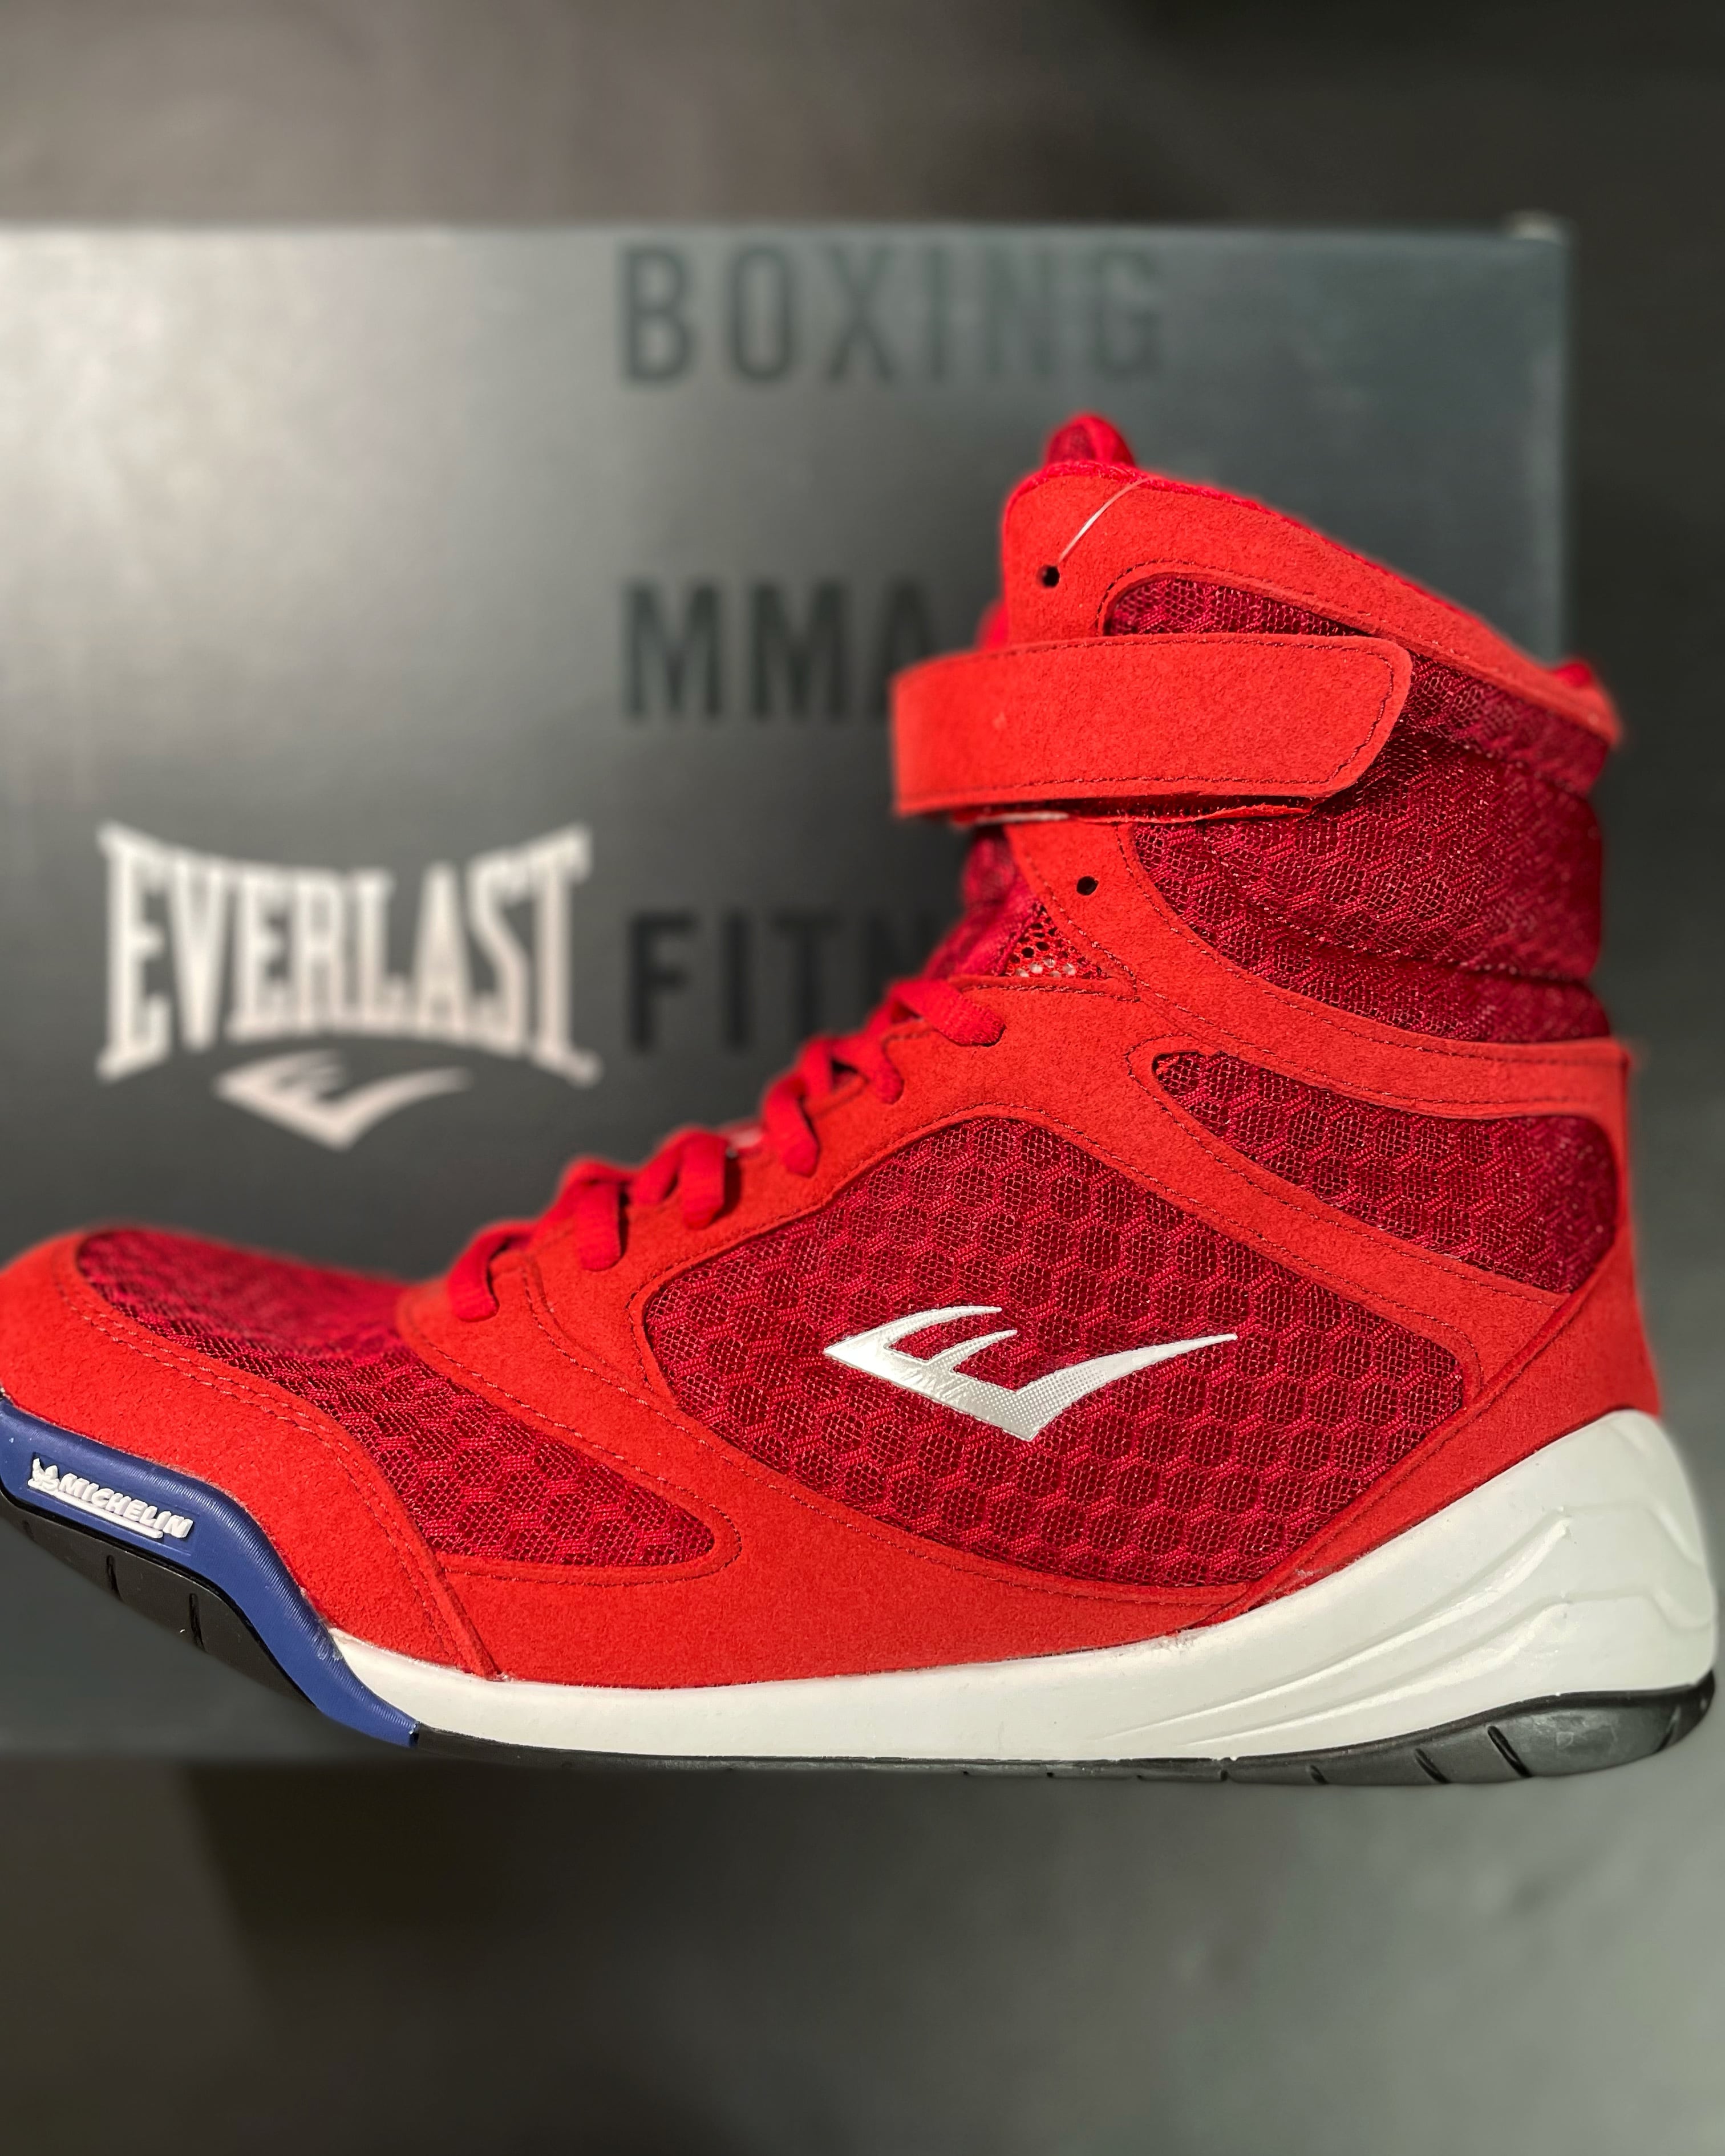 Everlastエバーラストエリートハイトップボクシングシューズ レッドElite Red High Top Boxing Shoes